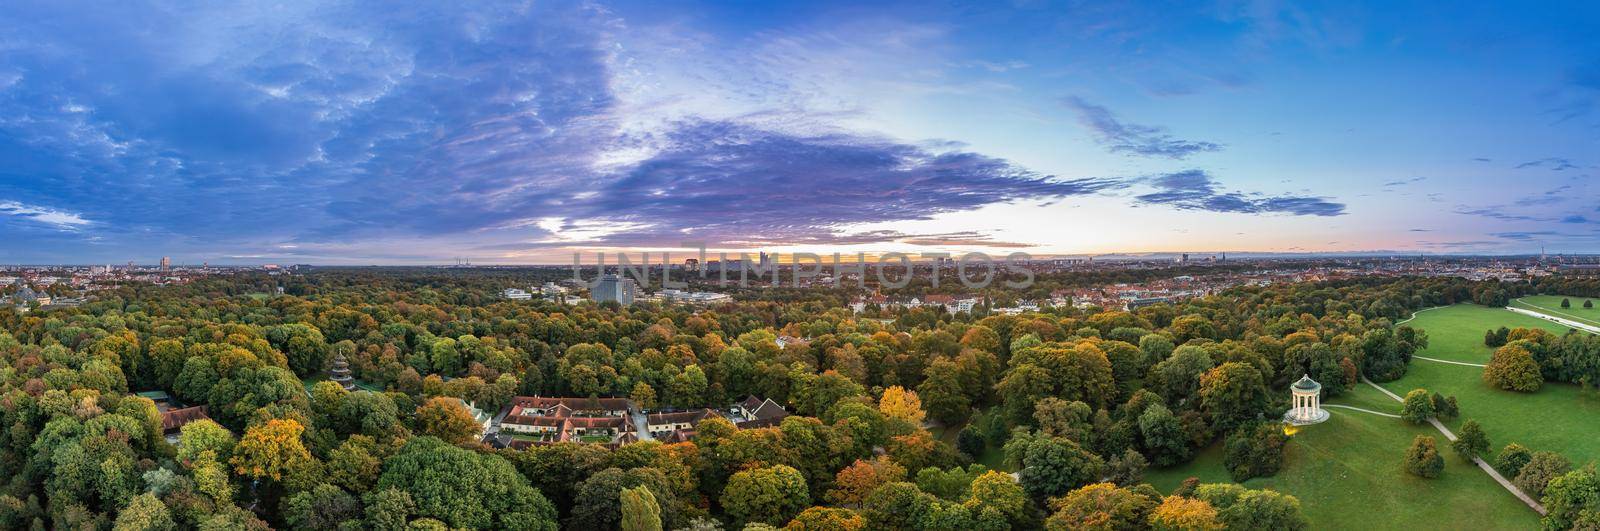 Munich's Englischer Garten in panoramic view as a popular tourism destination